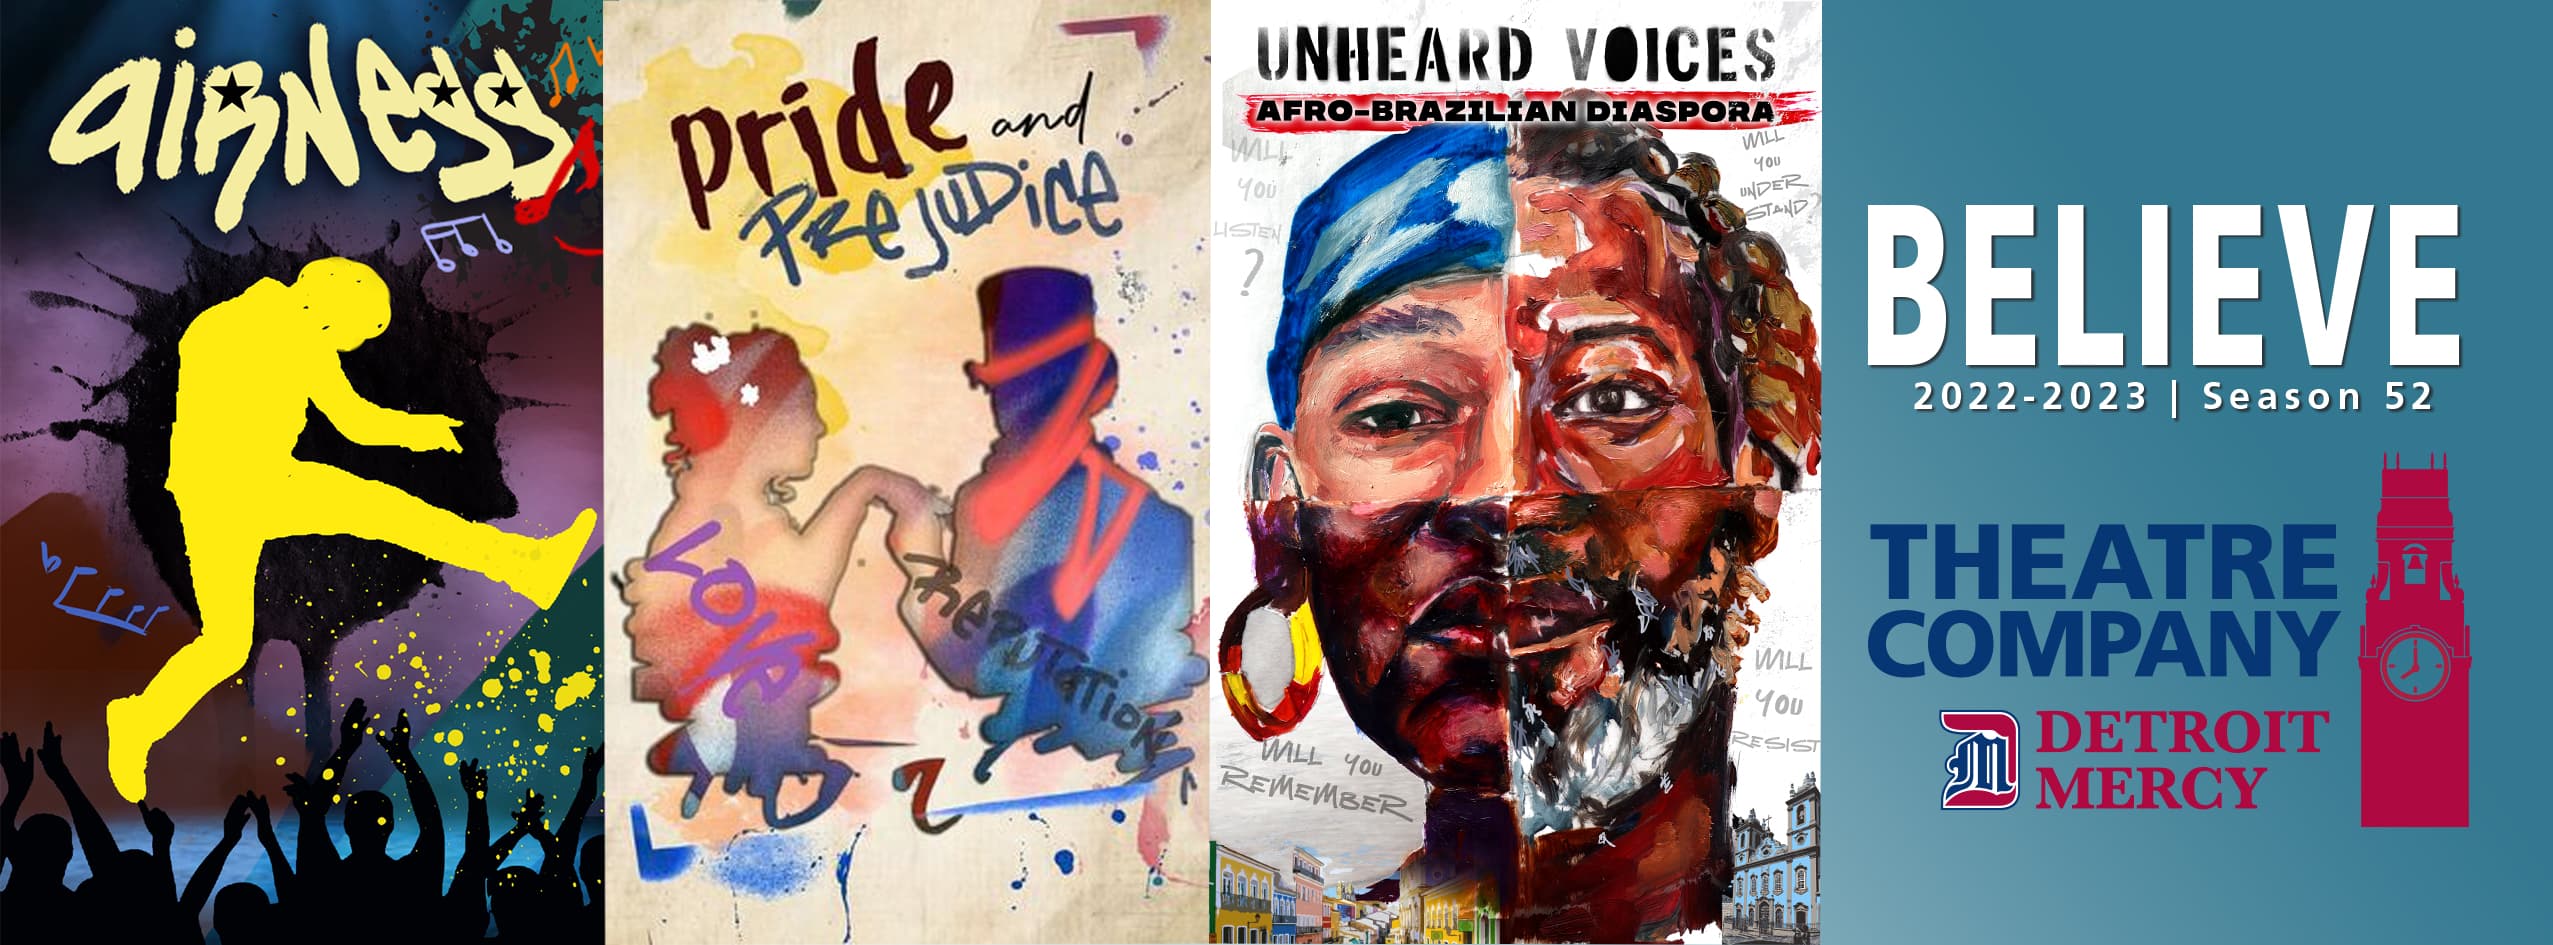 Season 52 Banner showcasing Airnes, Pride & Prejudice, and Unheard Voices: Afro-Brazilian Diaspora